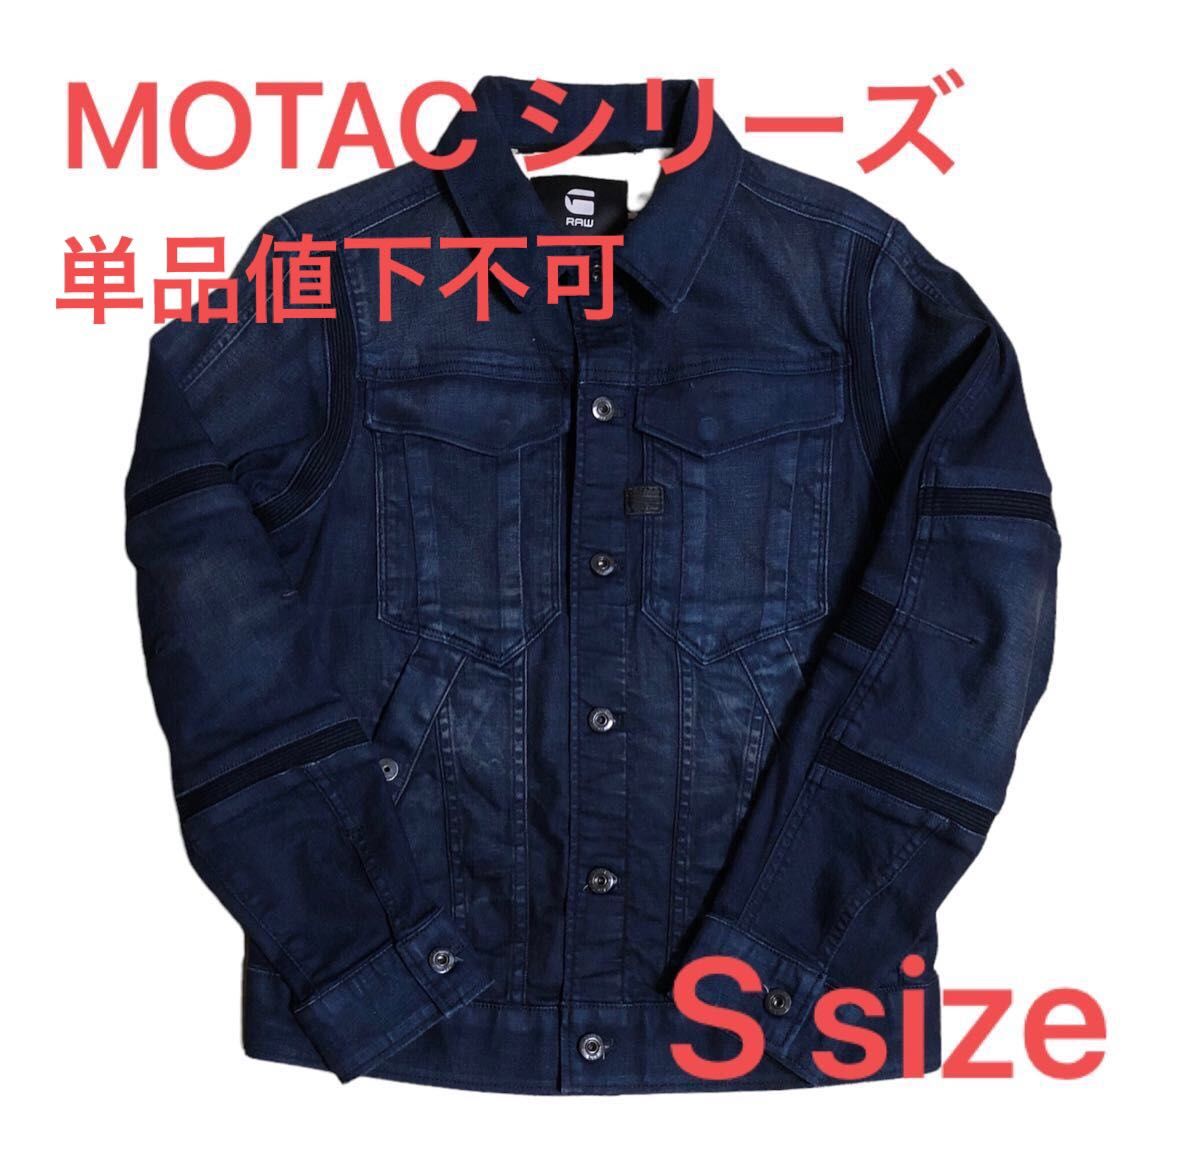 G-STAR RAW ジースターロゥ MOTAC SLIM JKT デニムジャケット S size